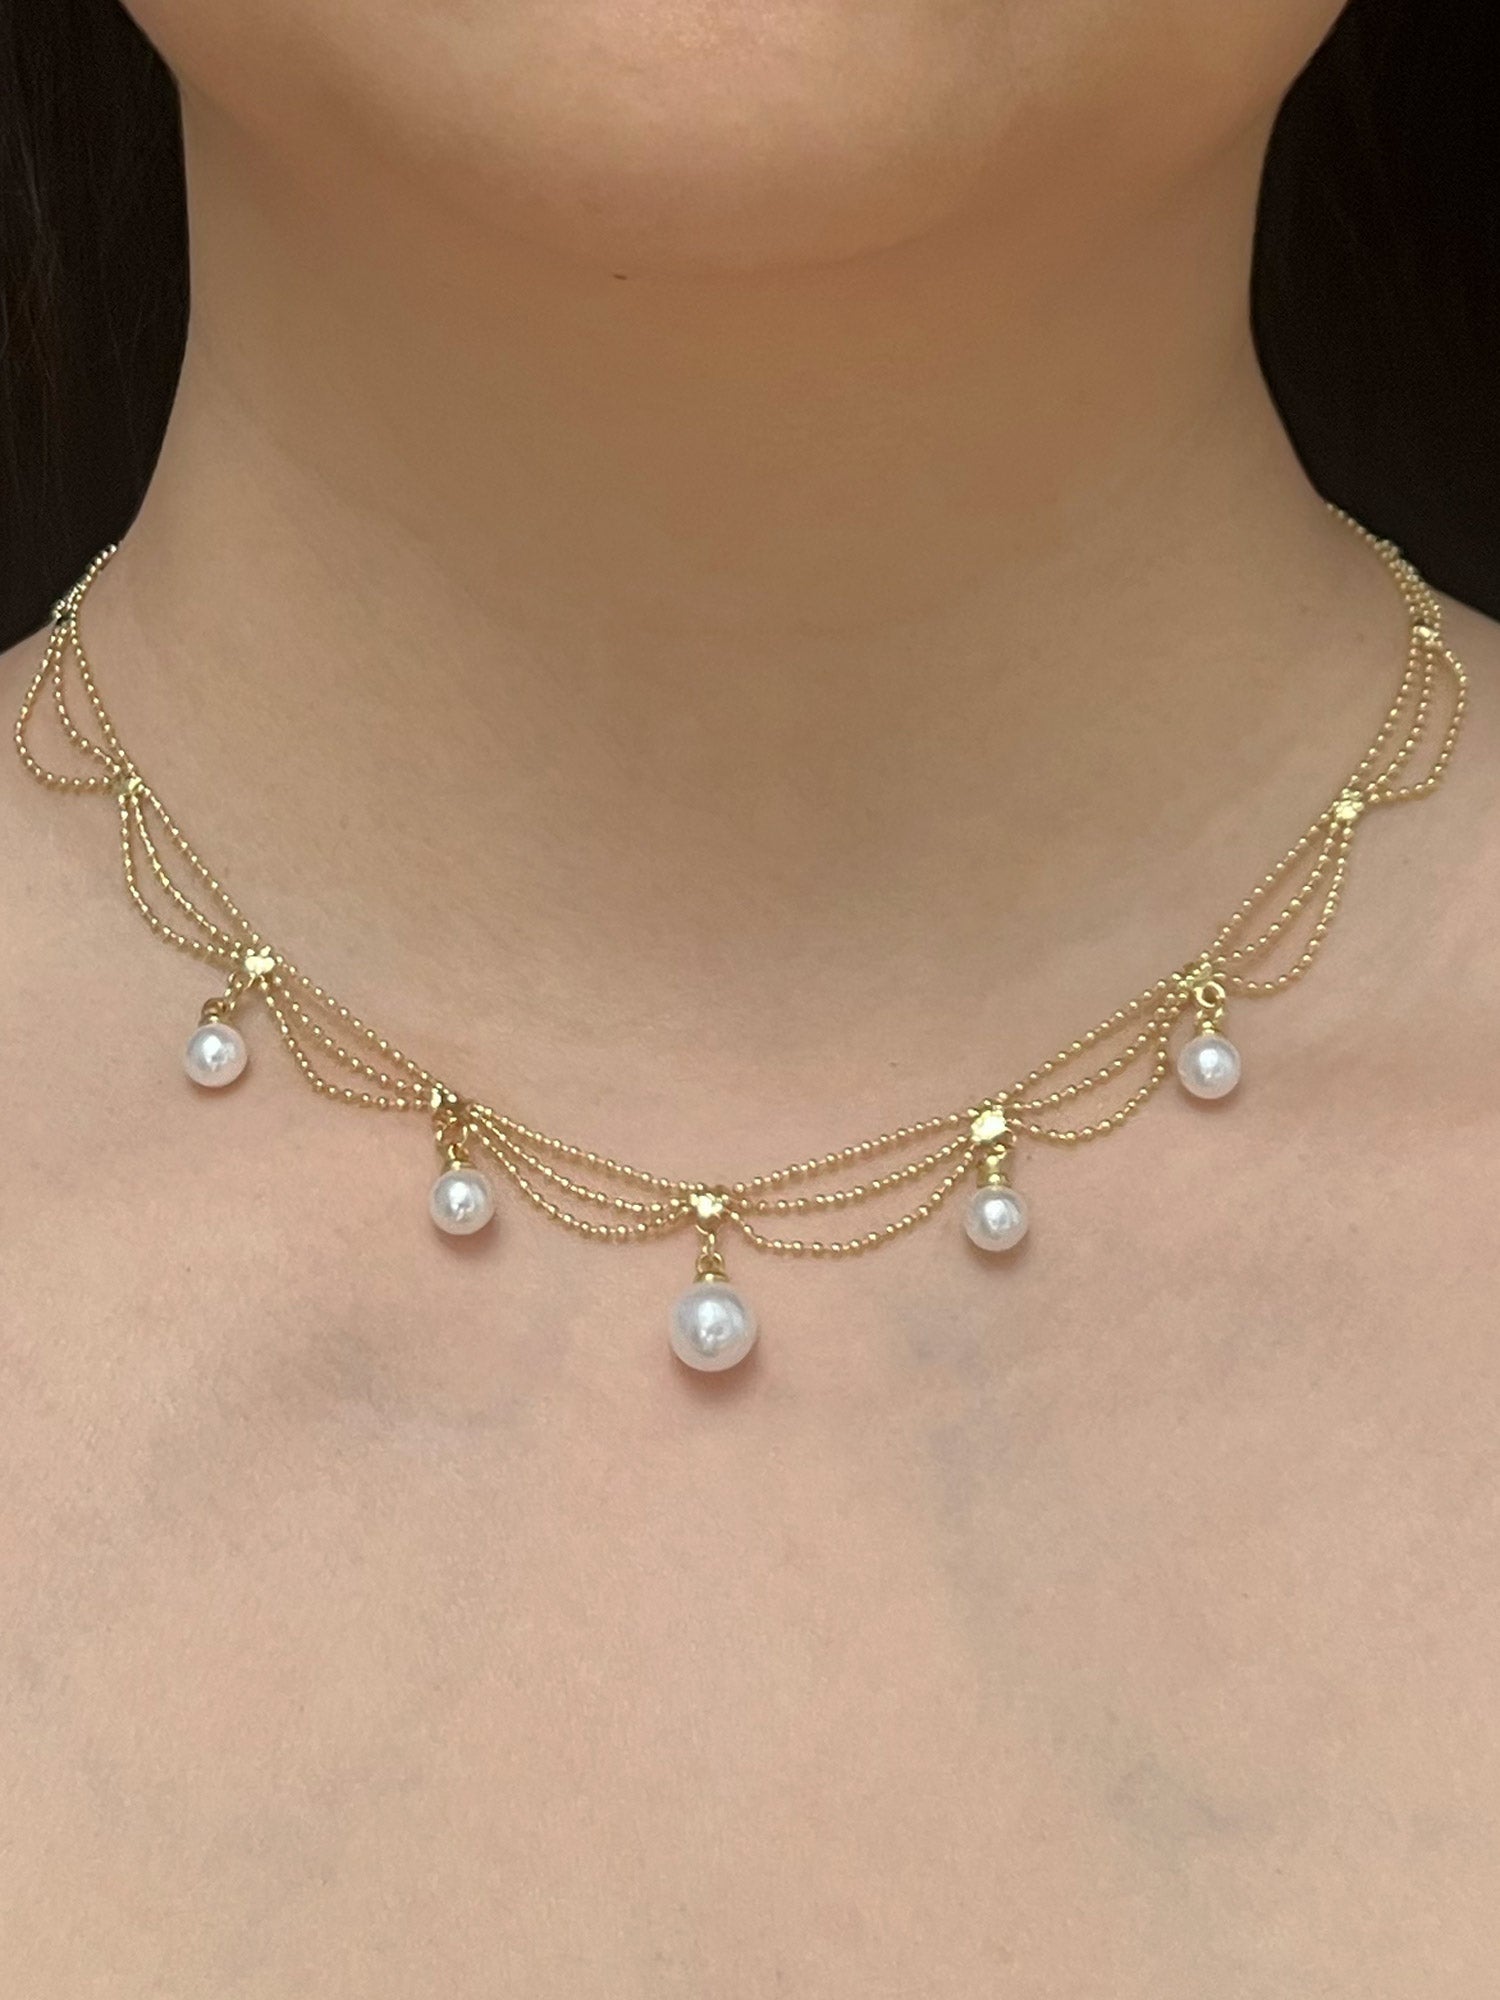 princess pearl necklace eb88a9ad 0537 4fae be7a 950de2786994